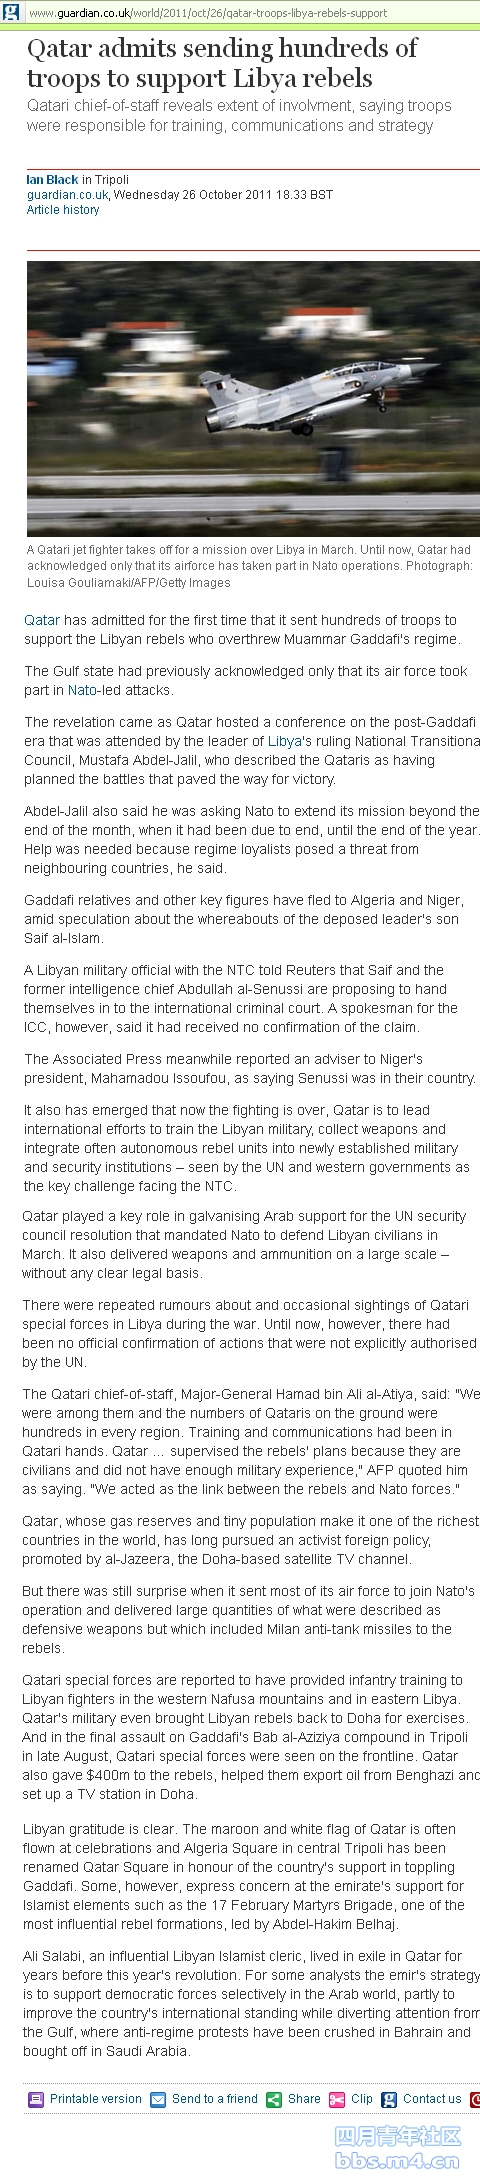 Qatar admits sending  troops _Guardian_2011_10_26_01.jpg